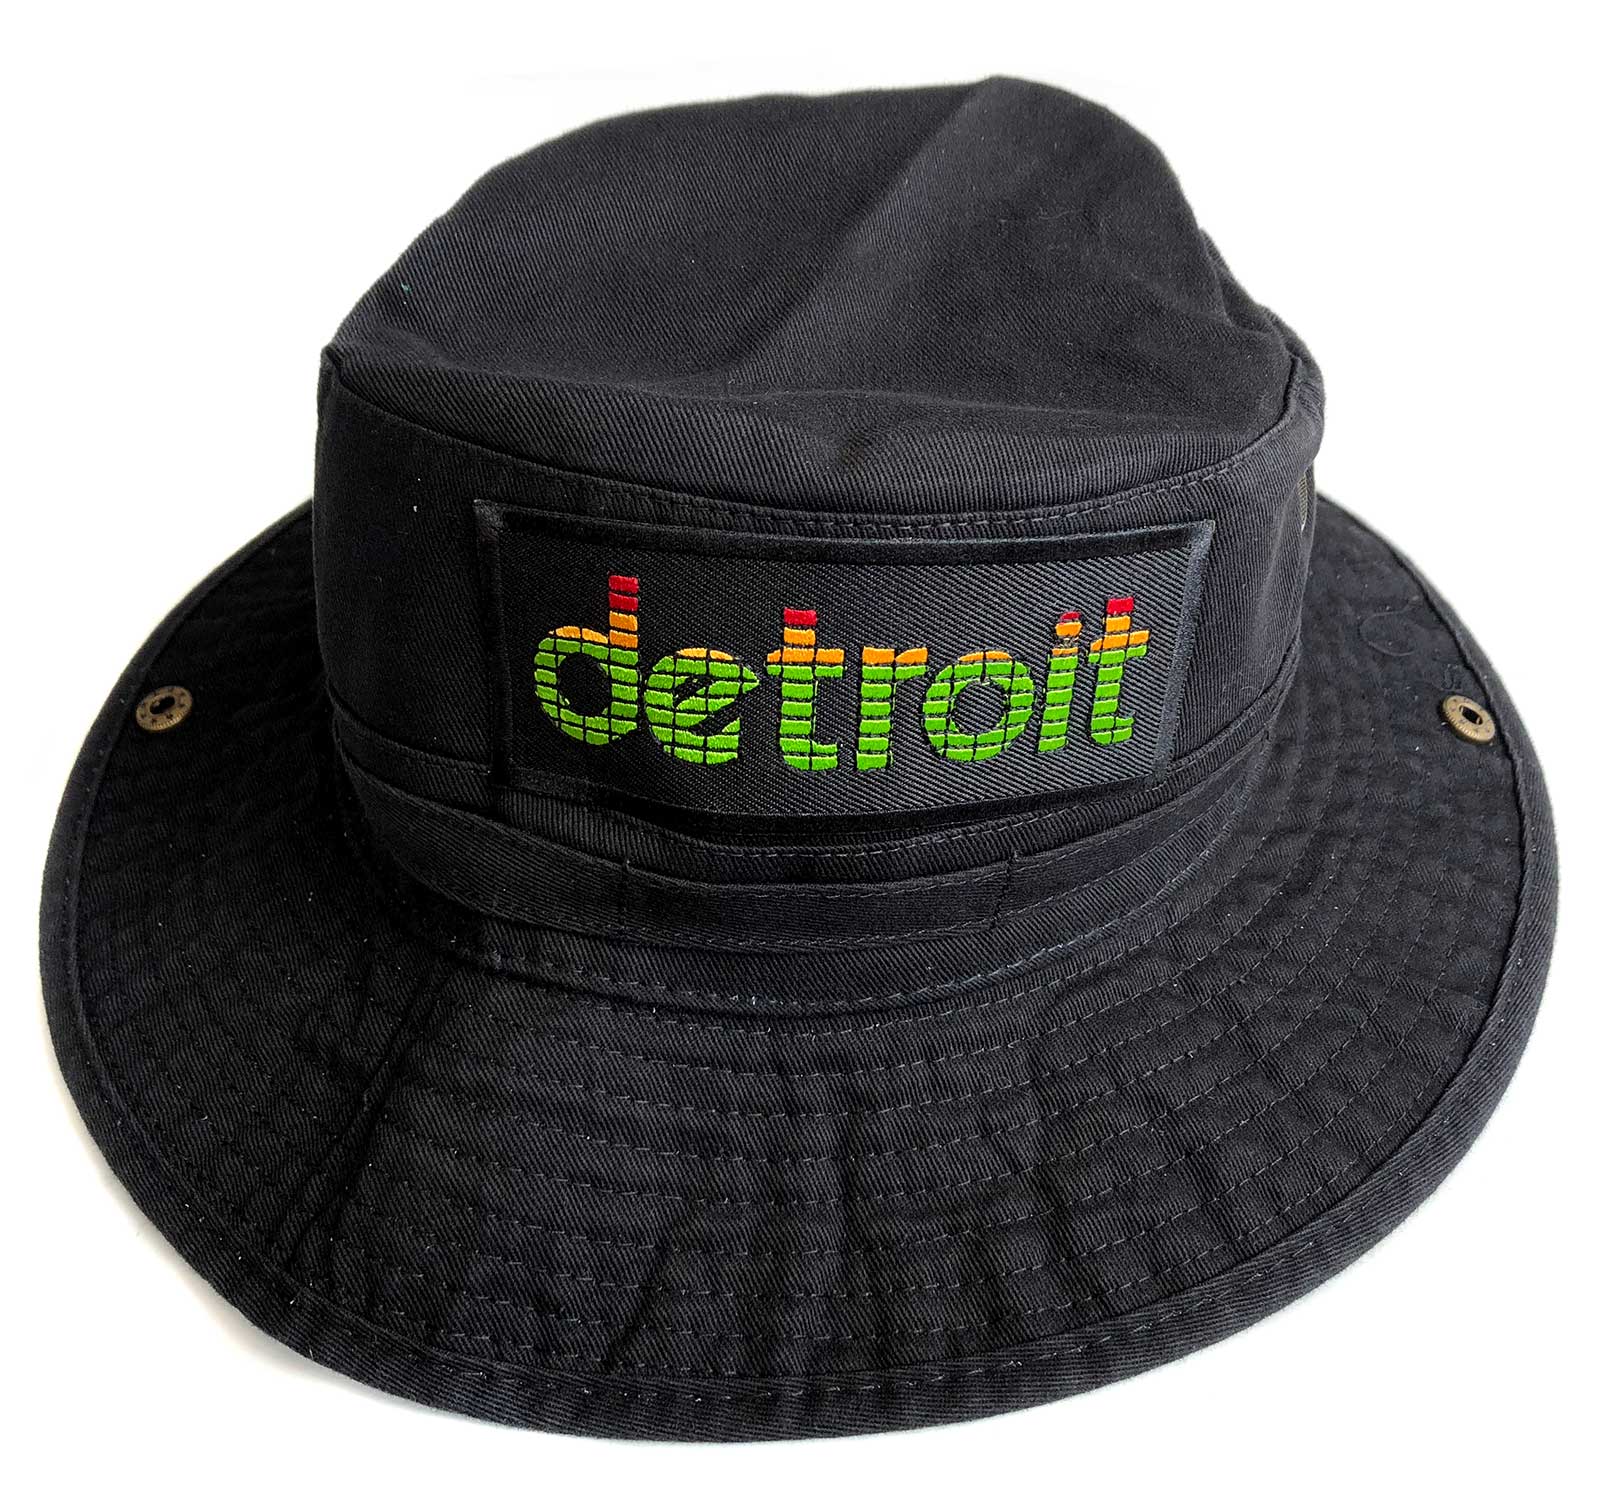 Peak Detroit Bucket Hat, LED Audio Level Meter, Well Done Goods